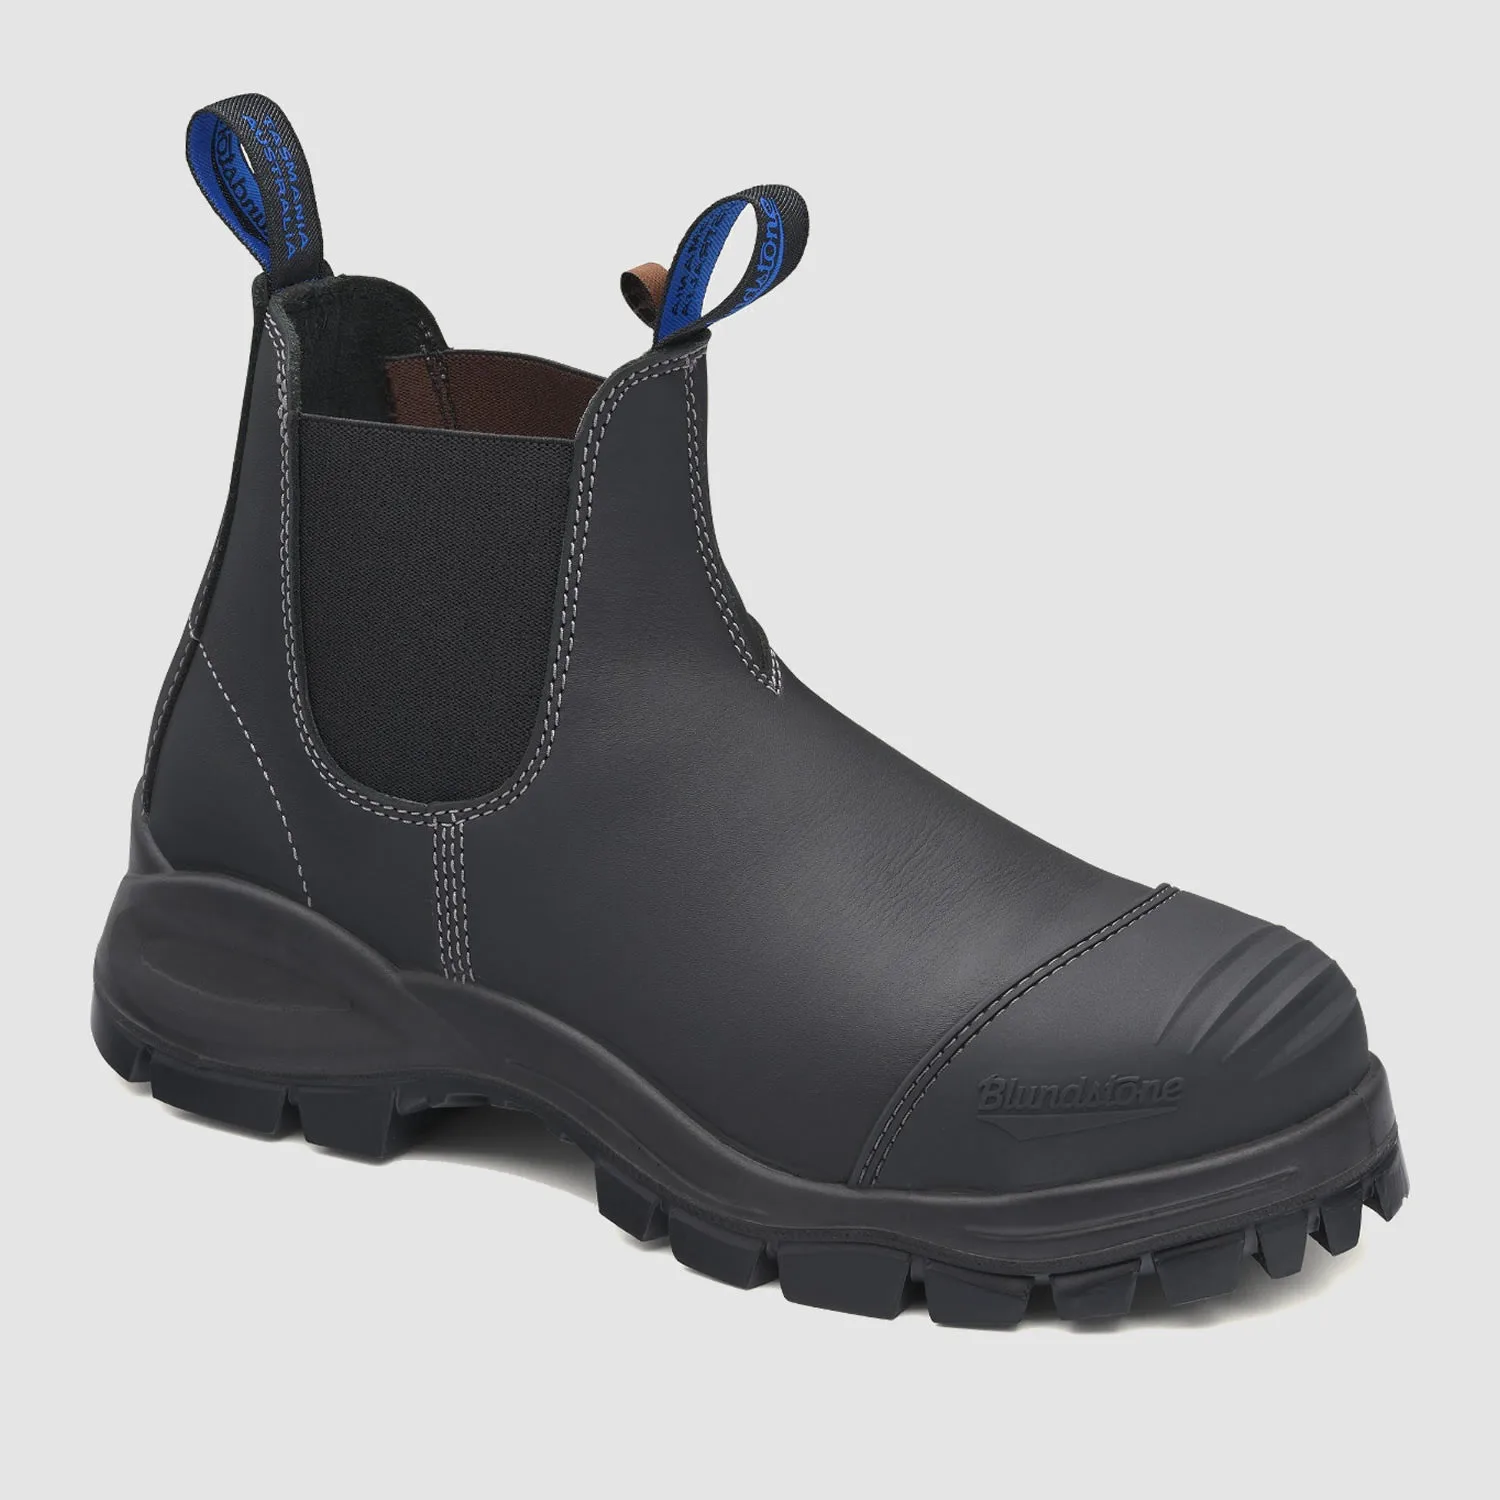 Blundstone #990 Unisex Elastic Sided Safety Boots - Black